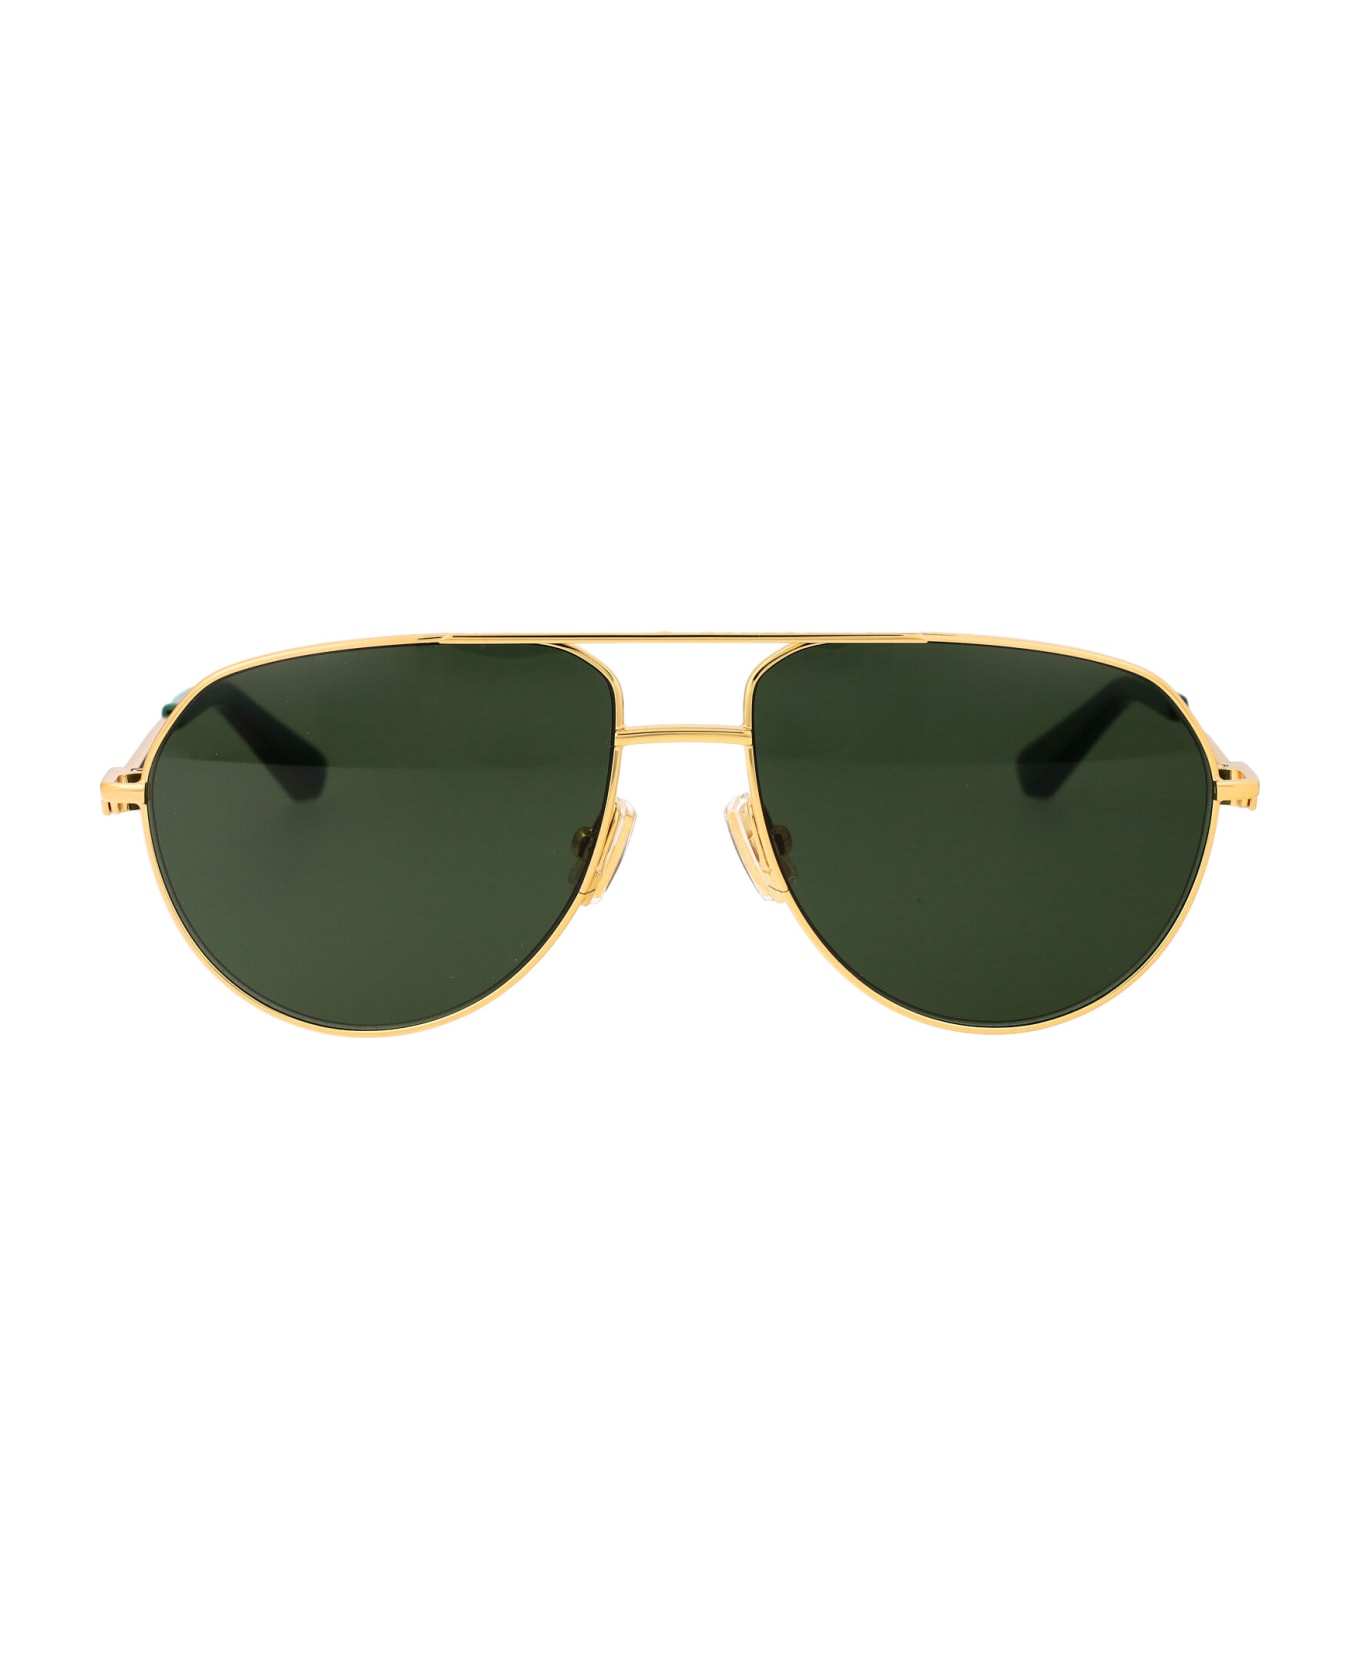 Bottega Veneta Eyewear Bv1302s Sunglasses - 003 GOLD GOLD GREEN